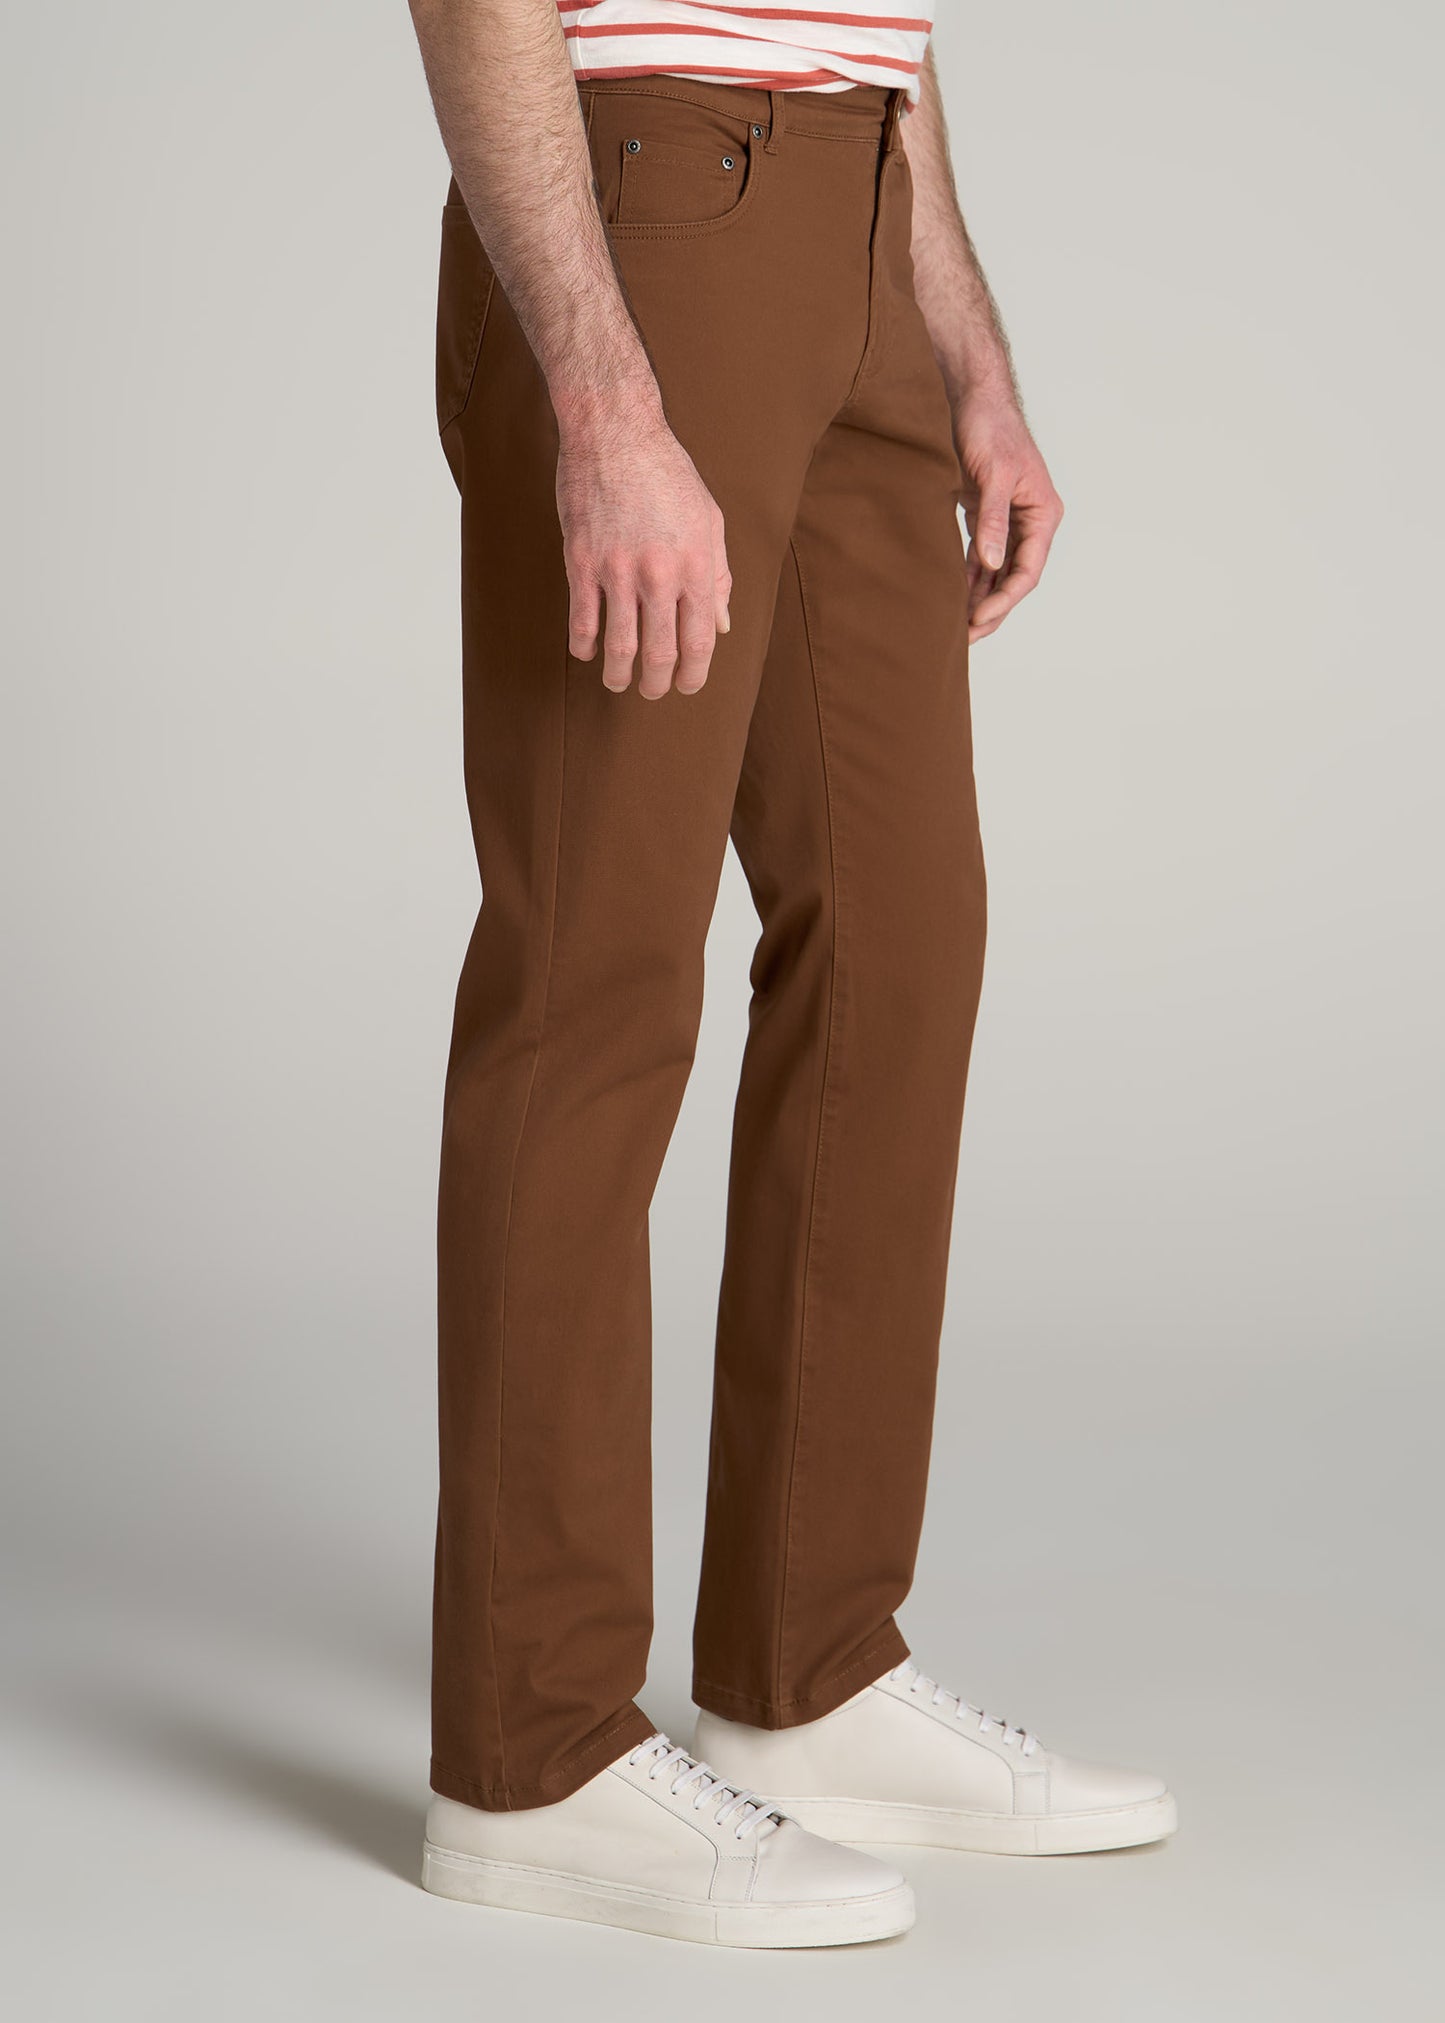 J1 STRAIGHT Leg Five-Pocket Pants for Tall Men in Nutshell